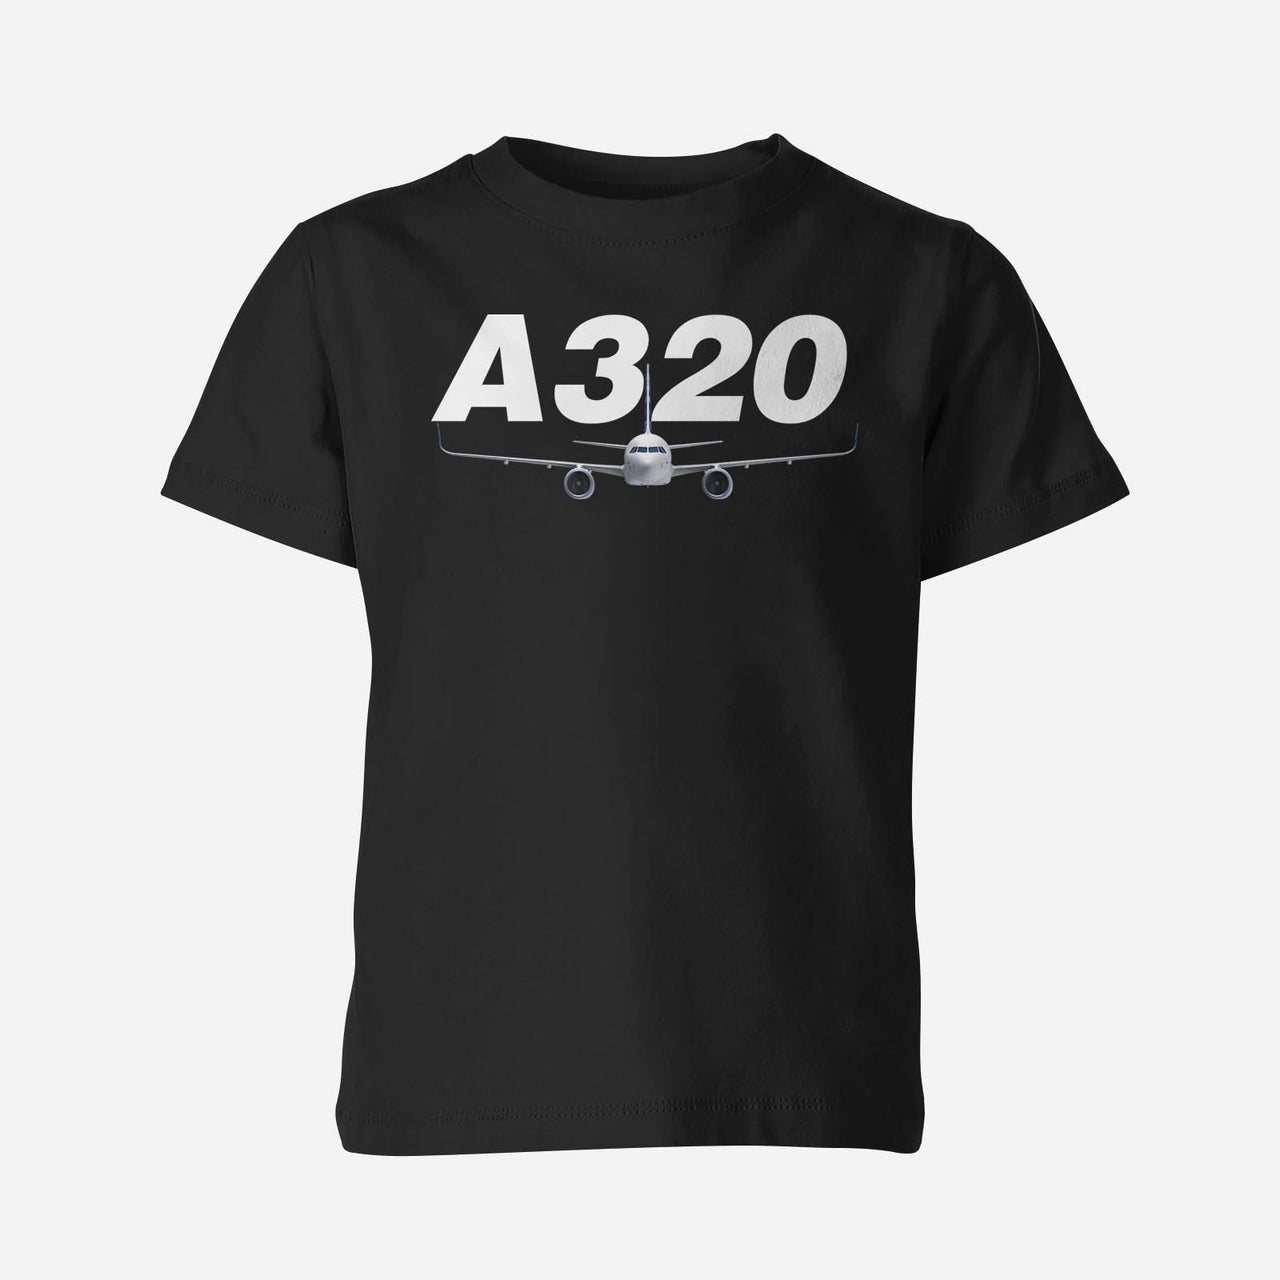 Super Airbus A320 Designed Children T-Shirts